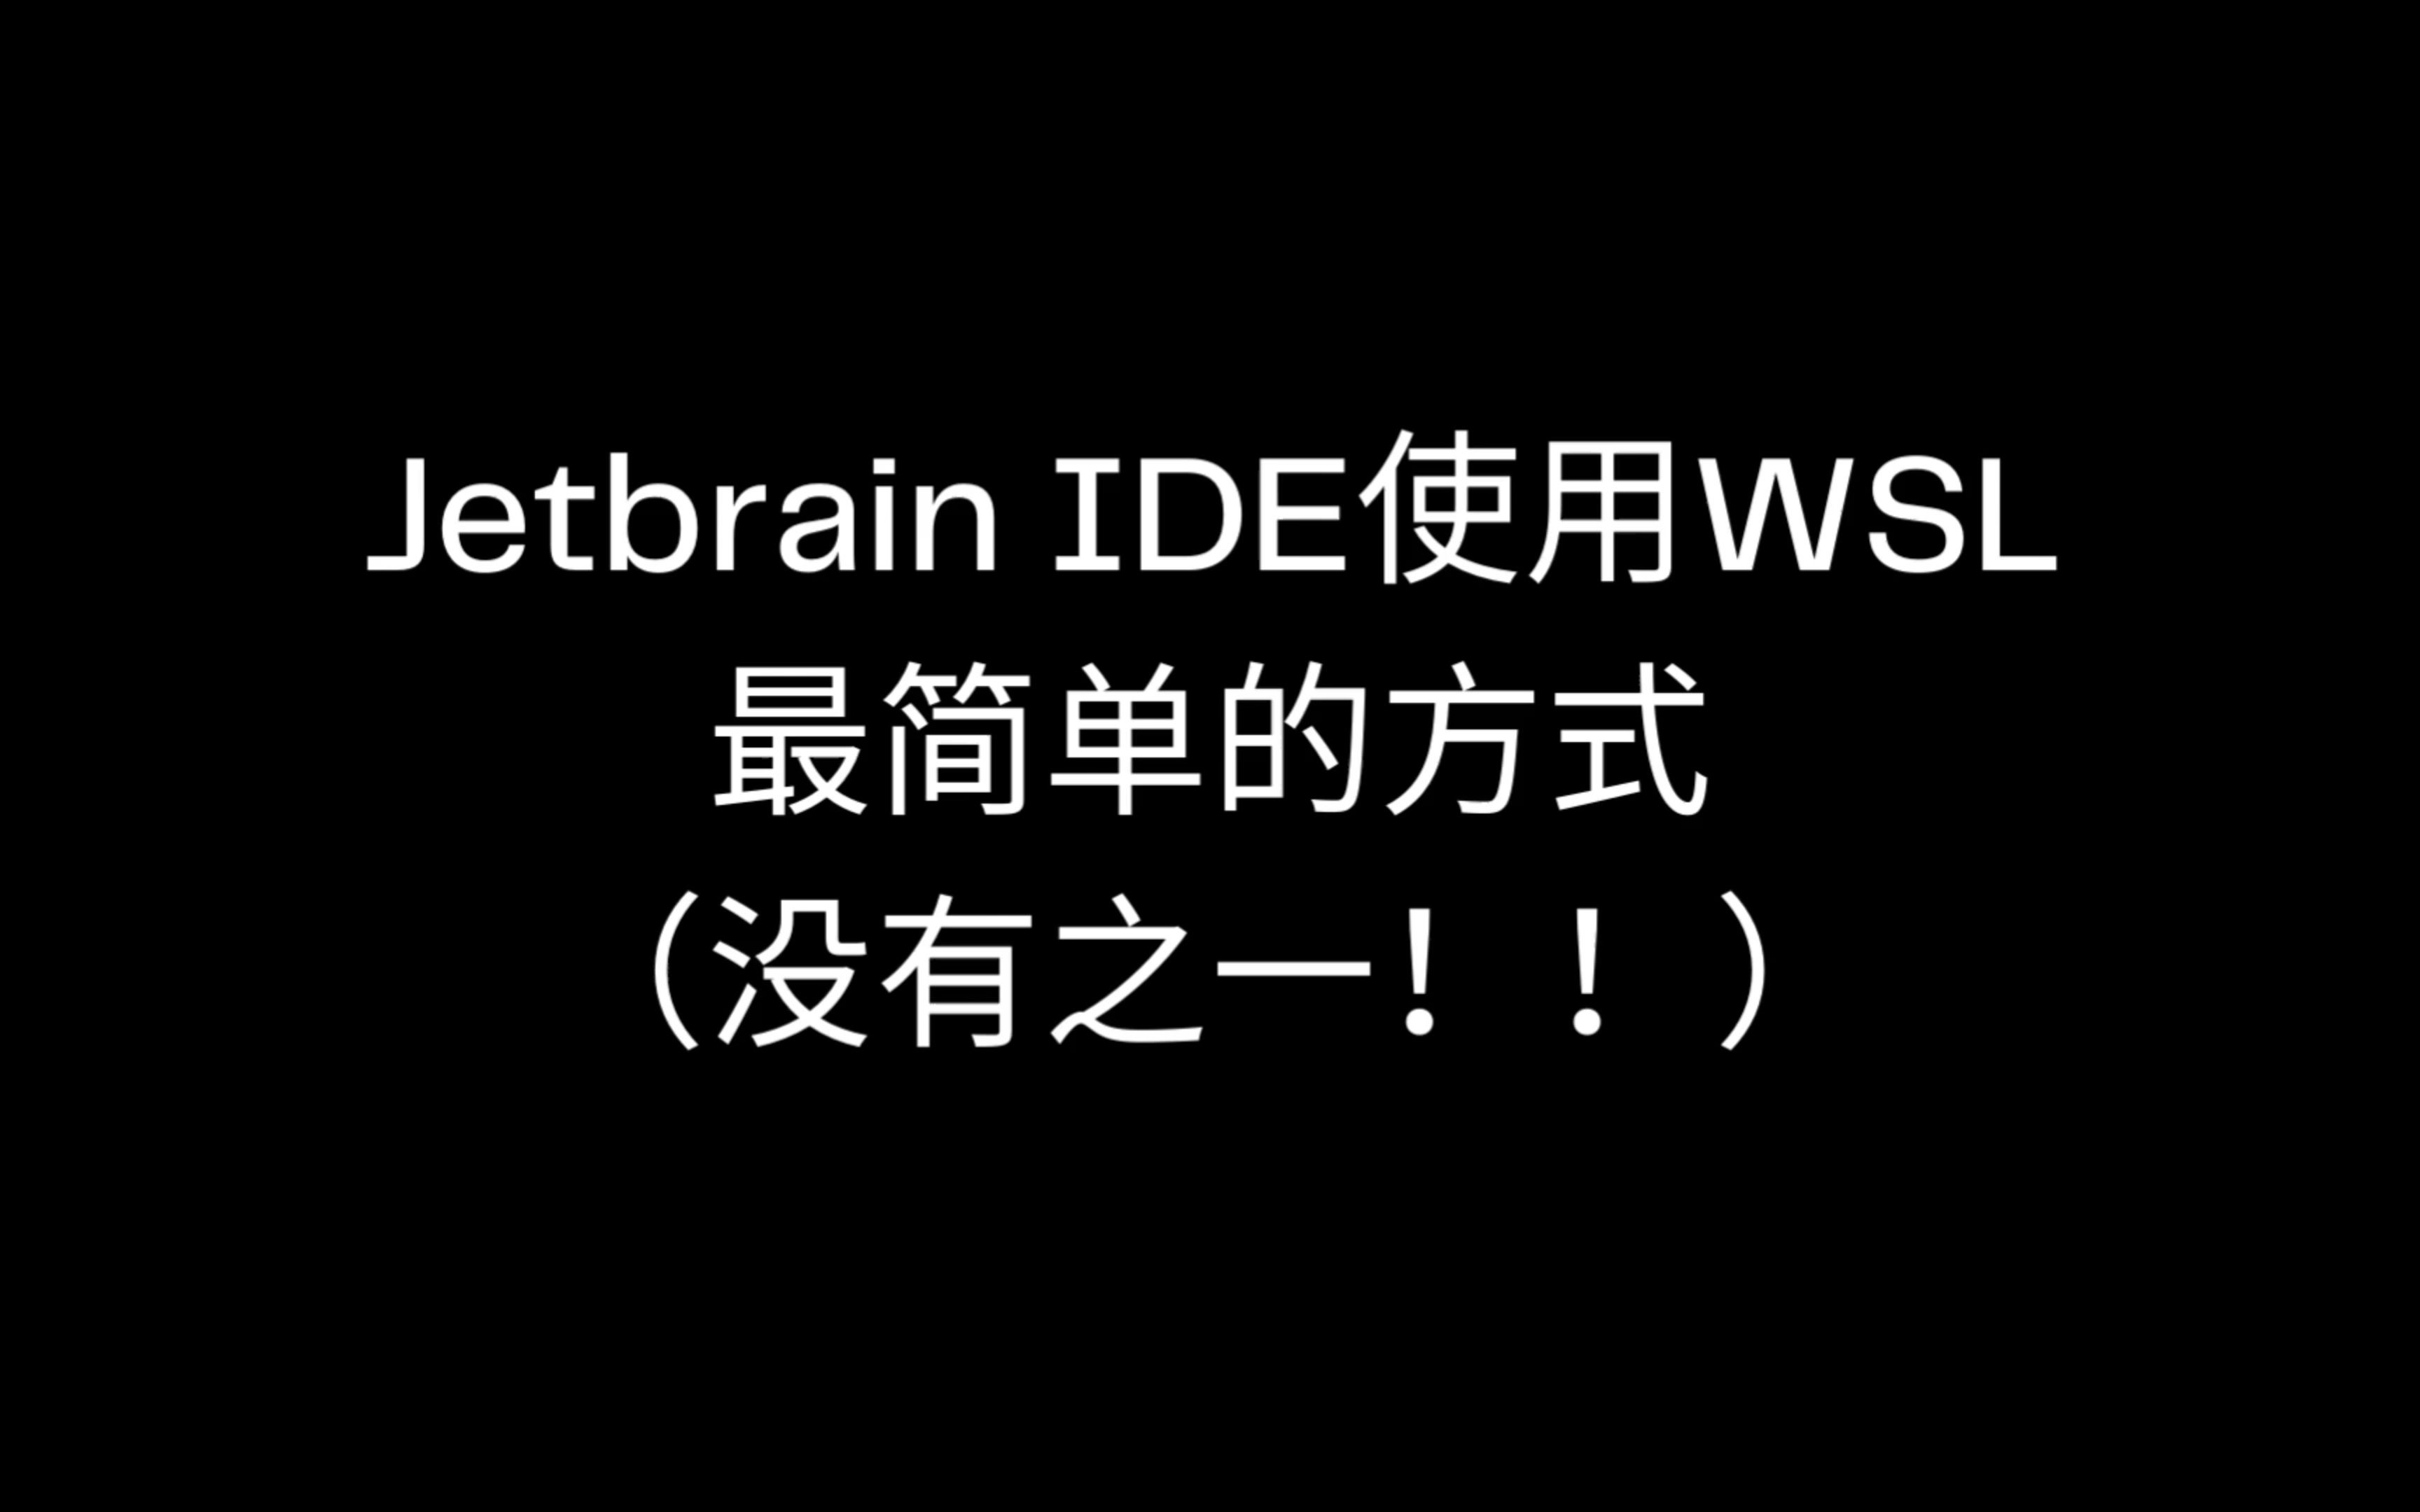 Jetbrain IDE使用WSL最简单的方式（没有之一！！！）